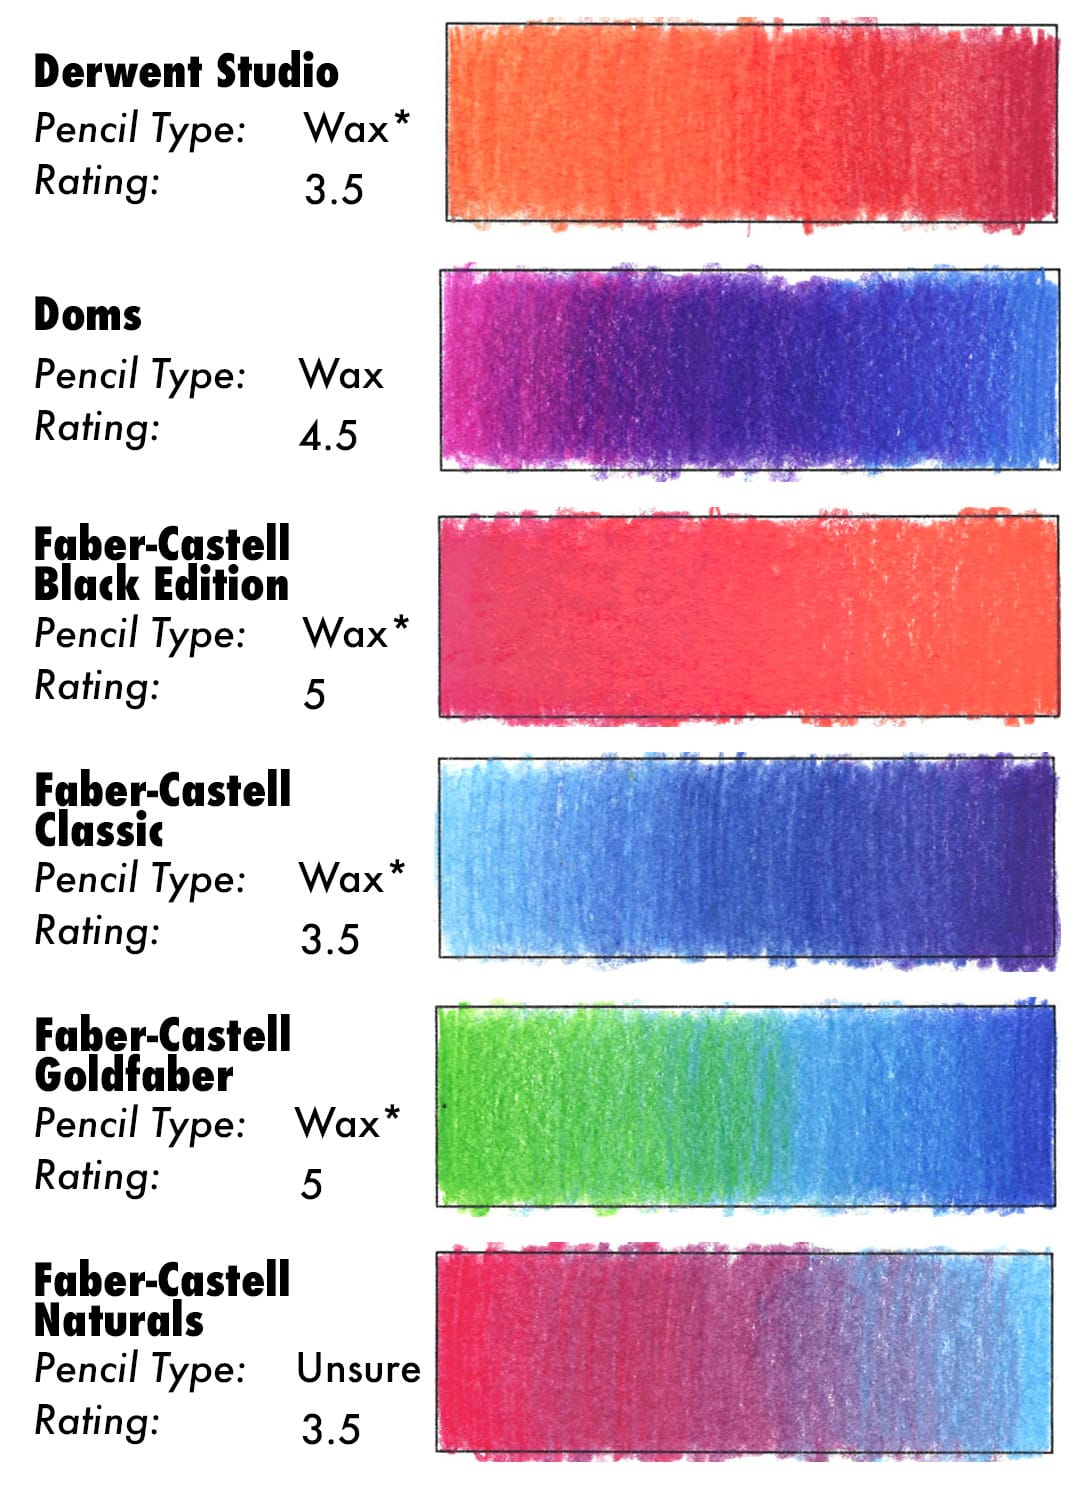 Colored Pencil Blending Results for Derwent Studio, Doms, Faber-Castell Black Edition, Faber-Castell Classic, Faber-Castell Goldfaber, and Faber-Castell Naturals.